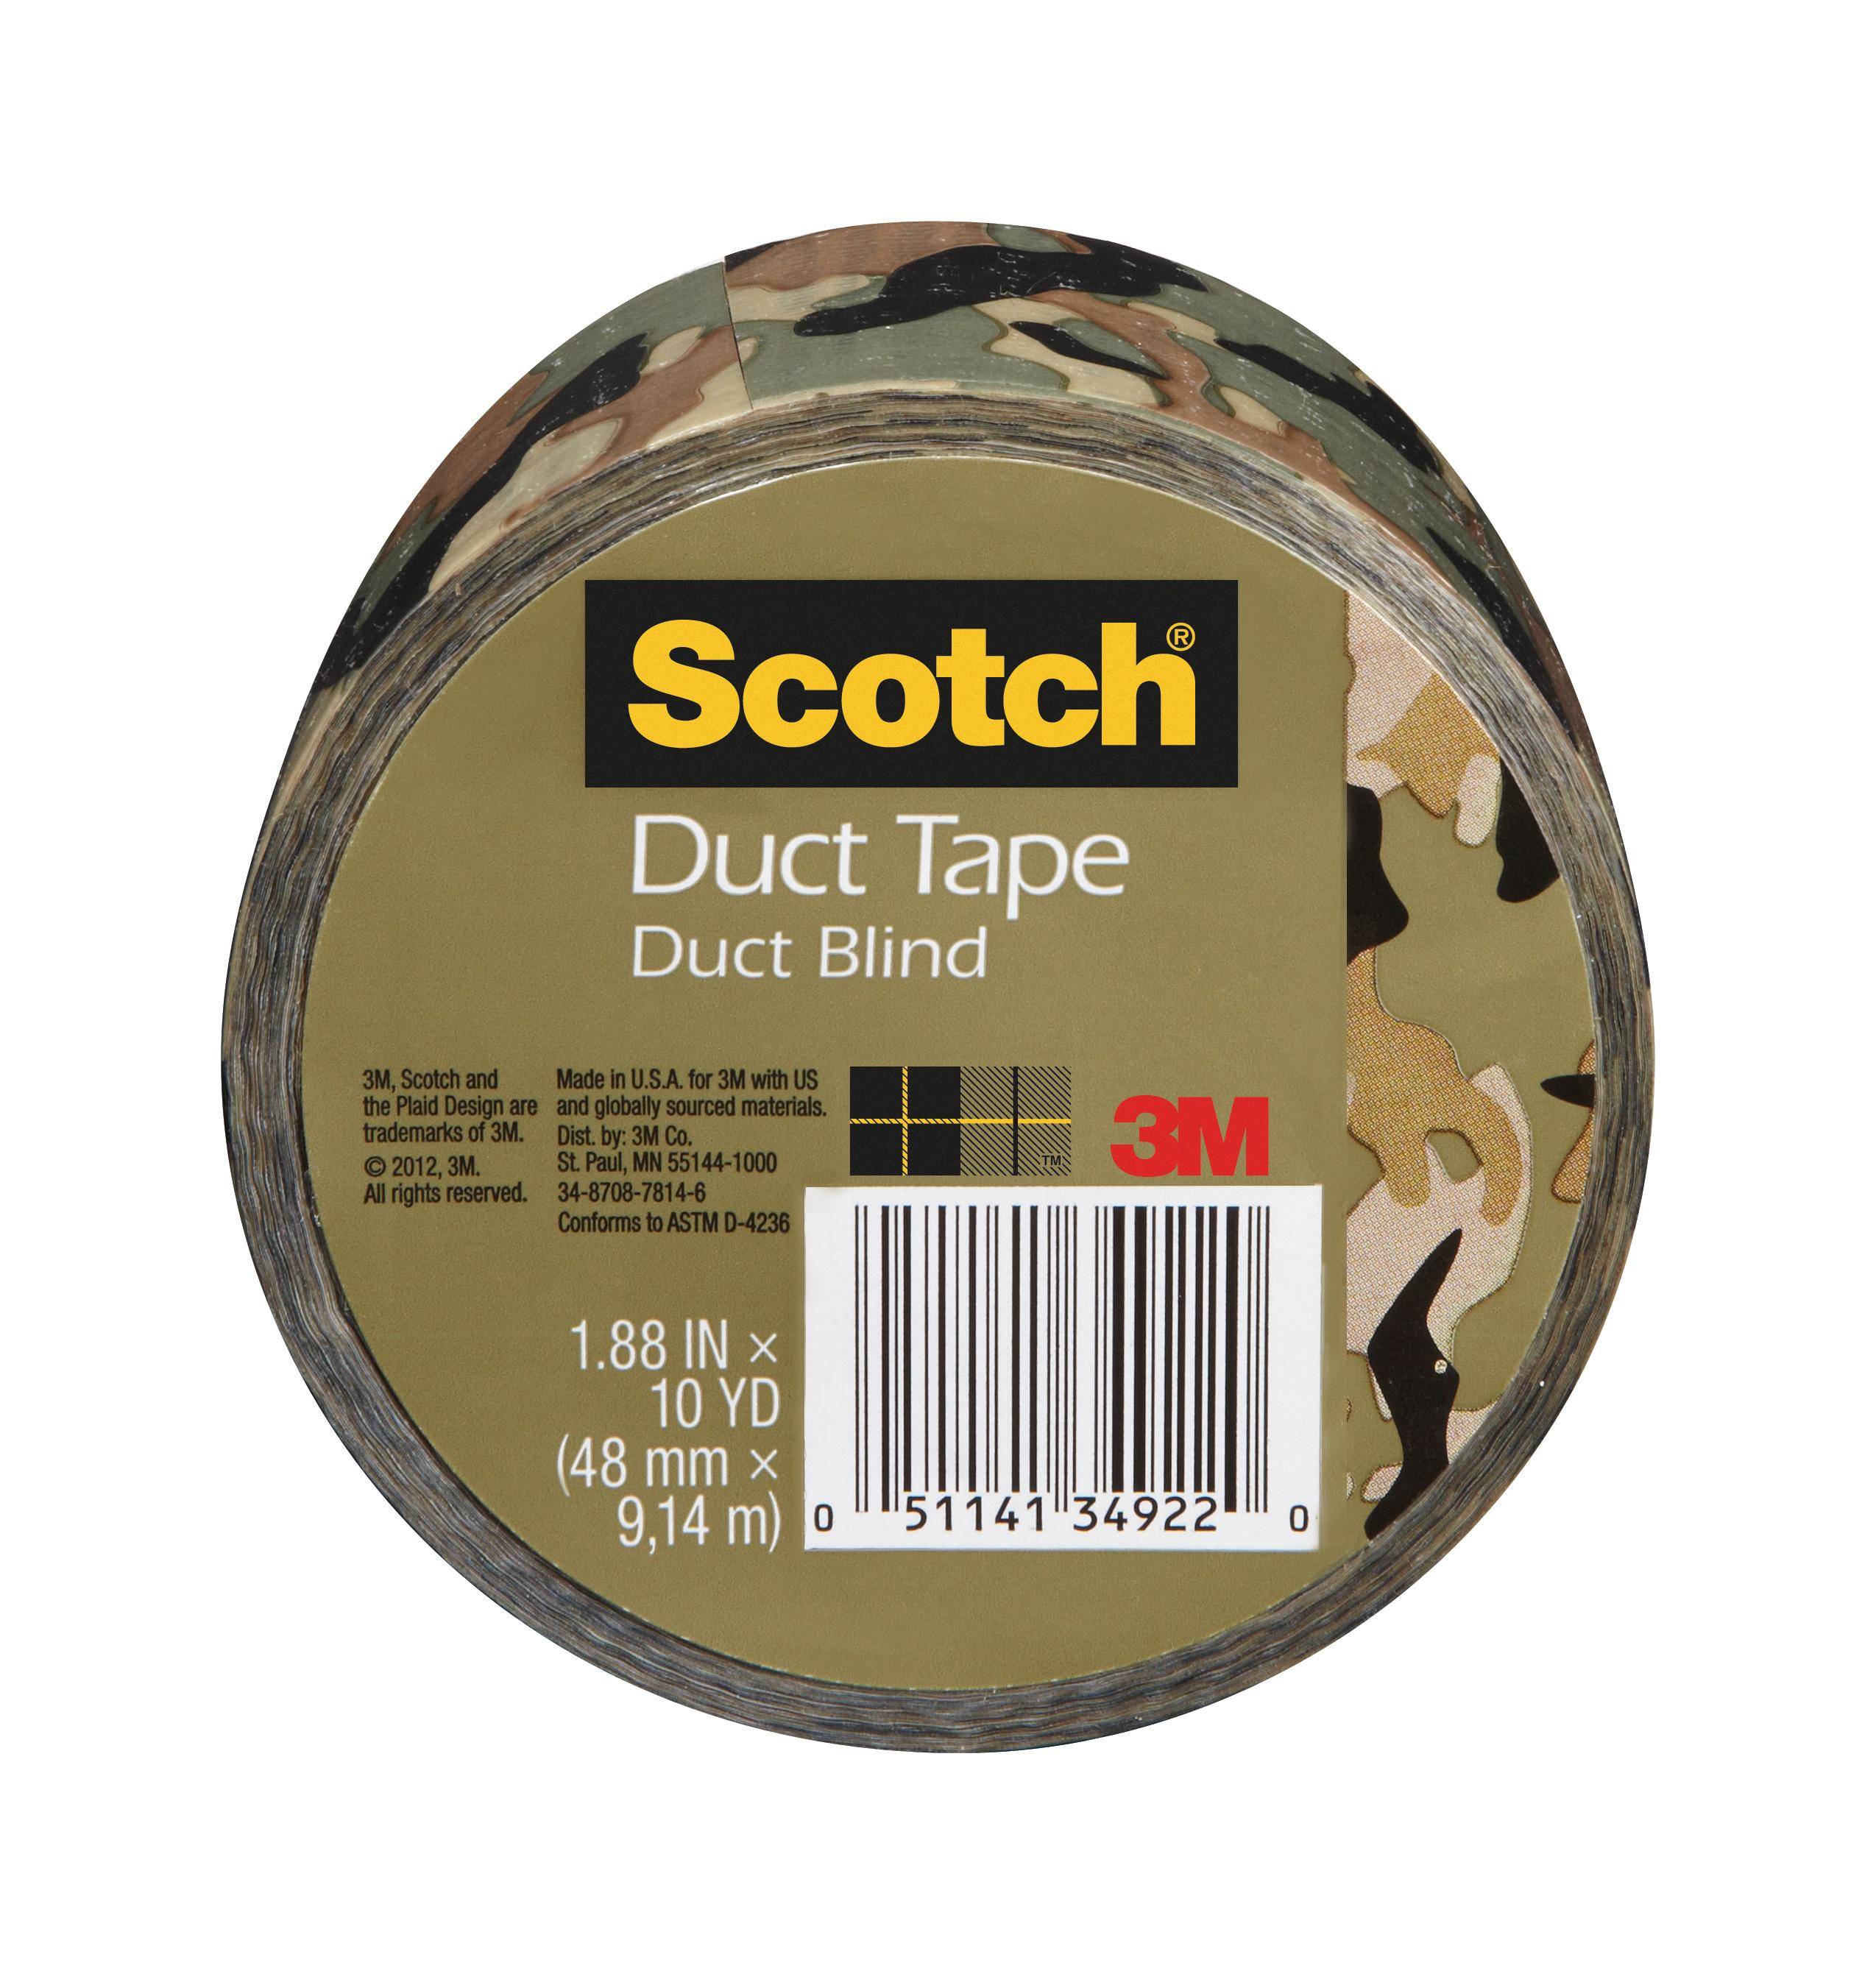 Scotch® 7100183304 All Weather Duct Tape, 11.562 in L x 4.187 in W